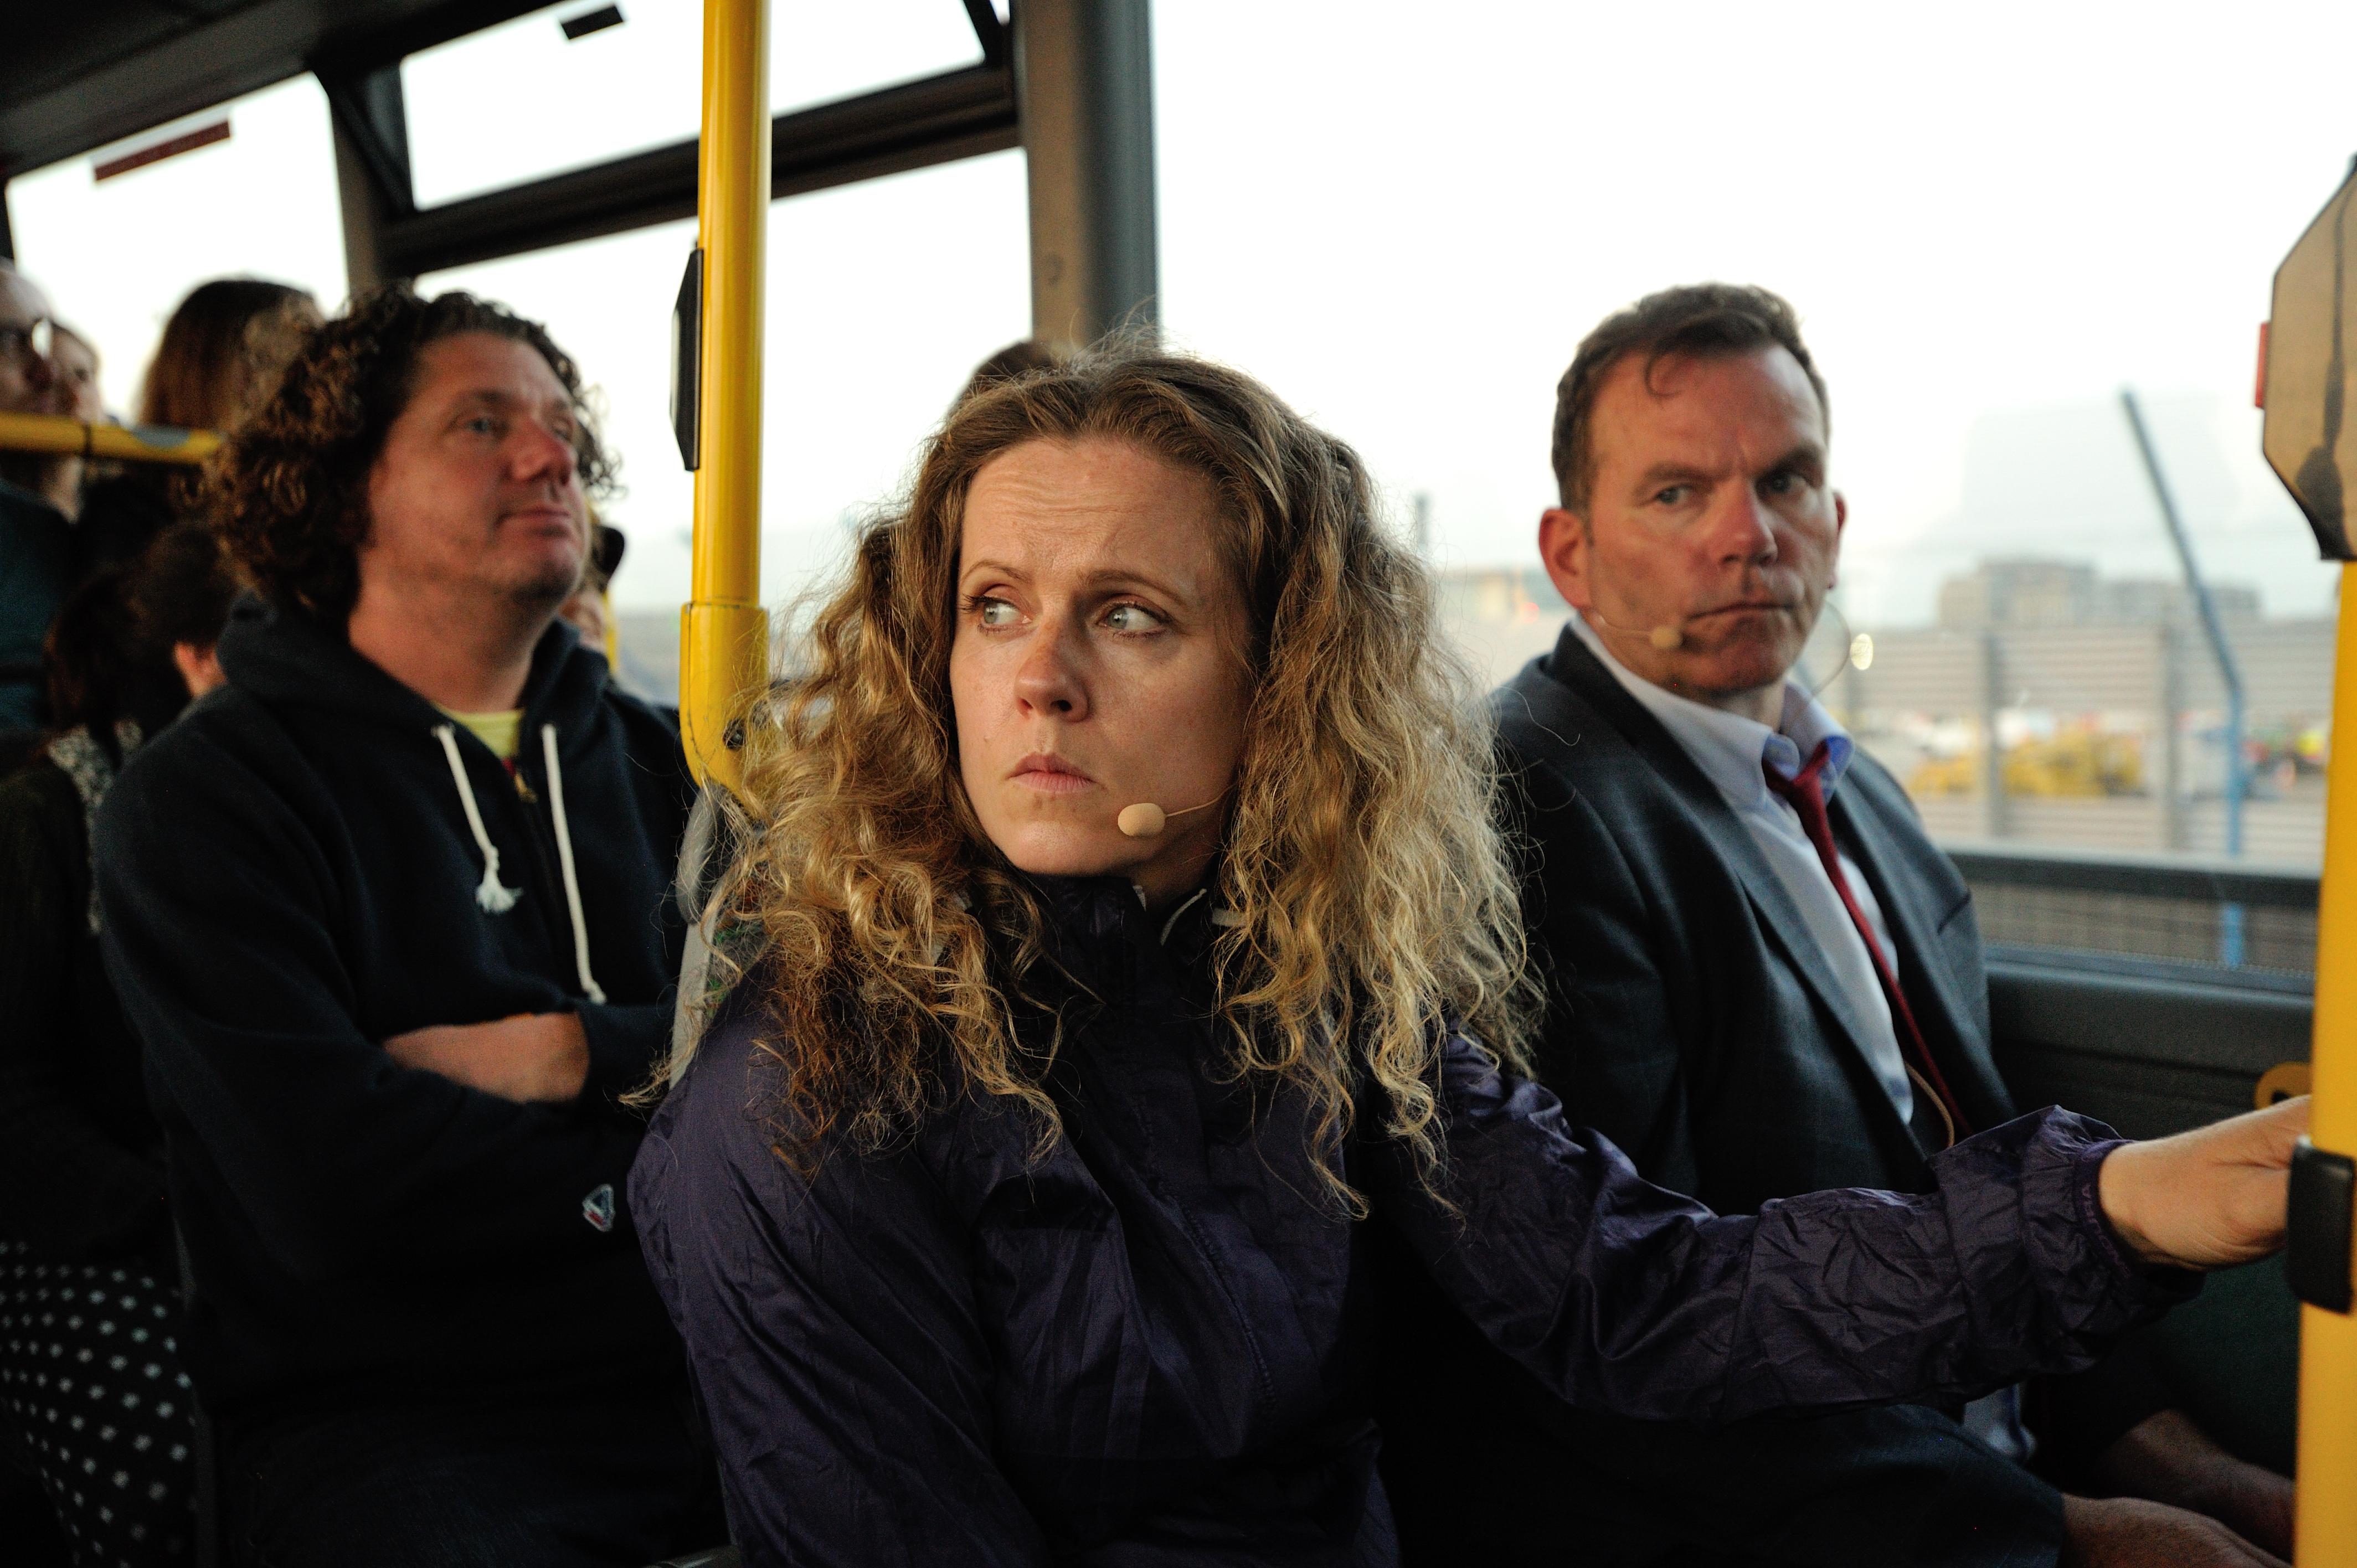 Passengers on a London Bus